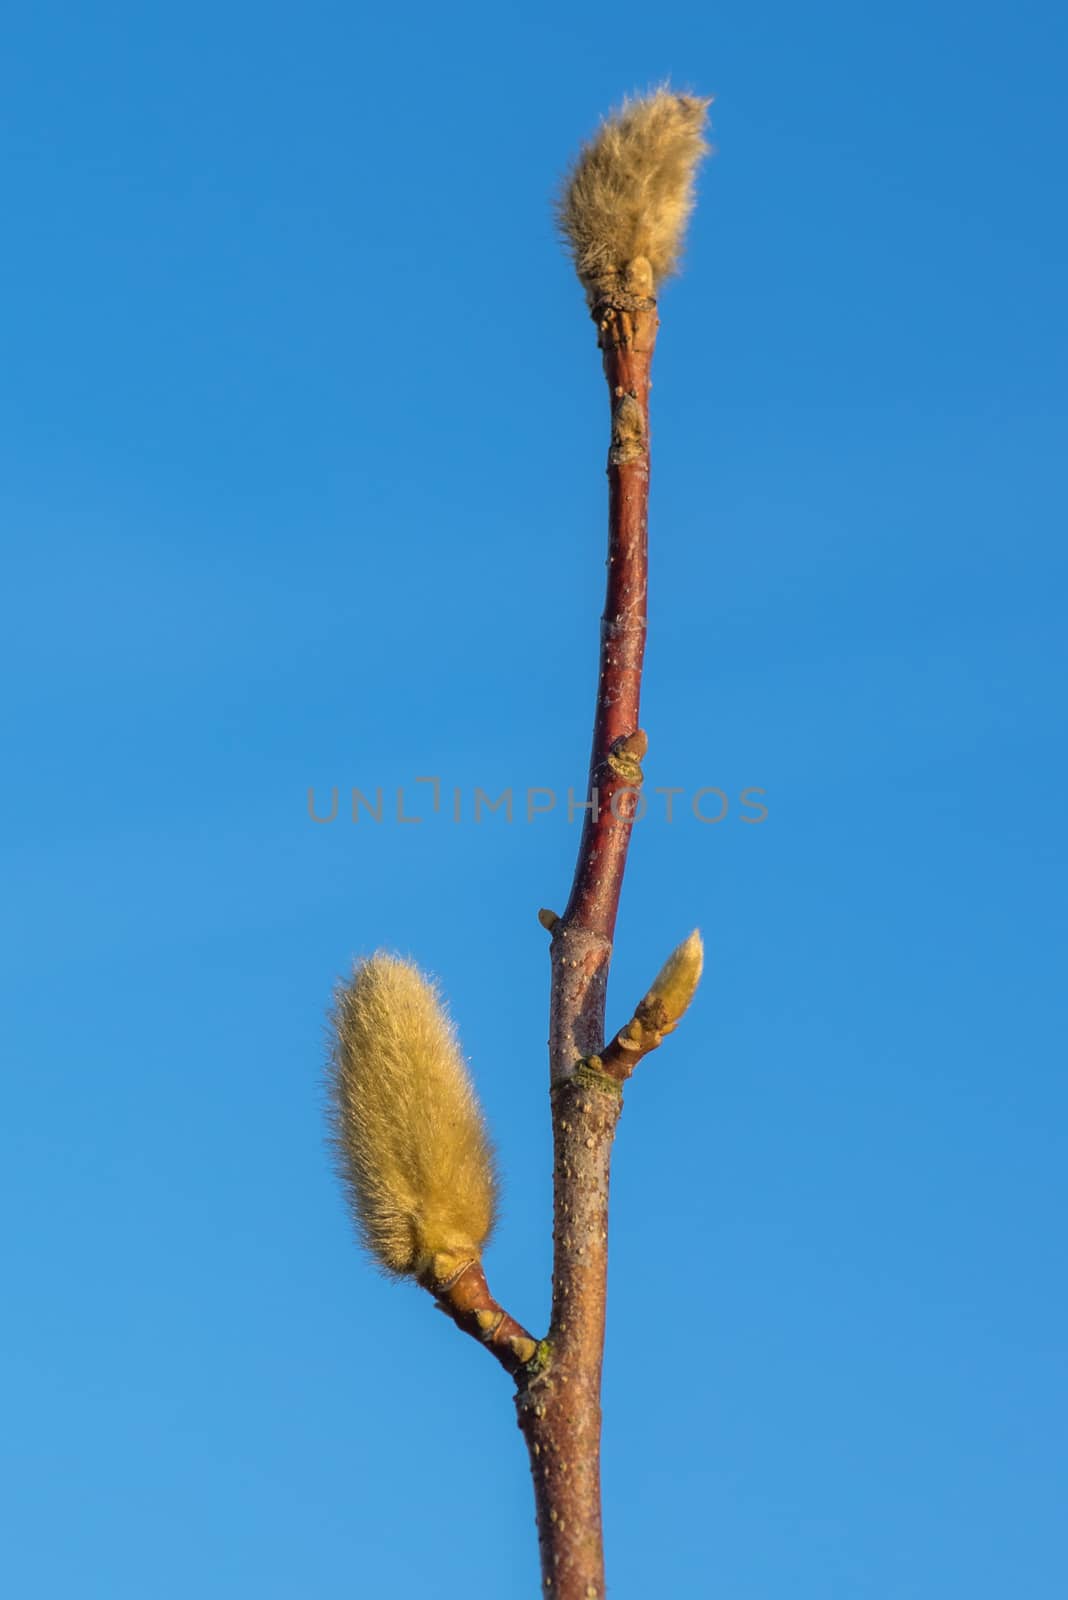 Magnolia tree with fluffy springtime buds